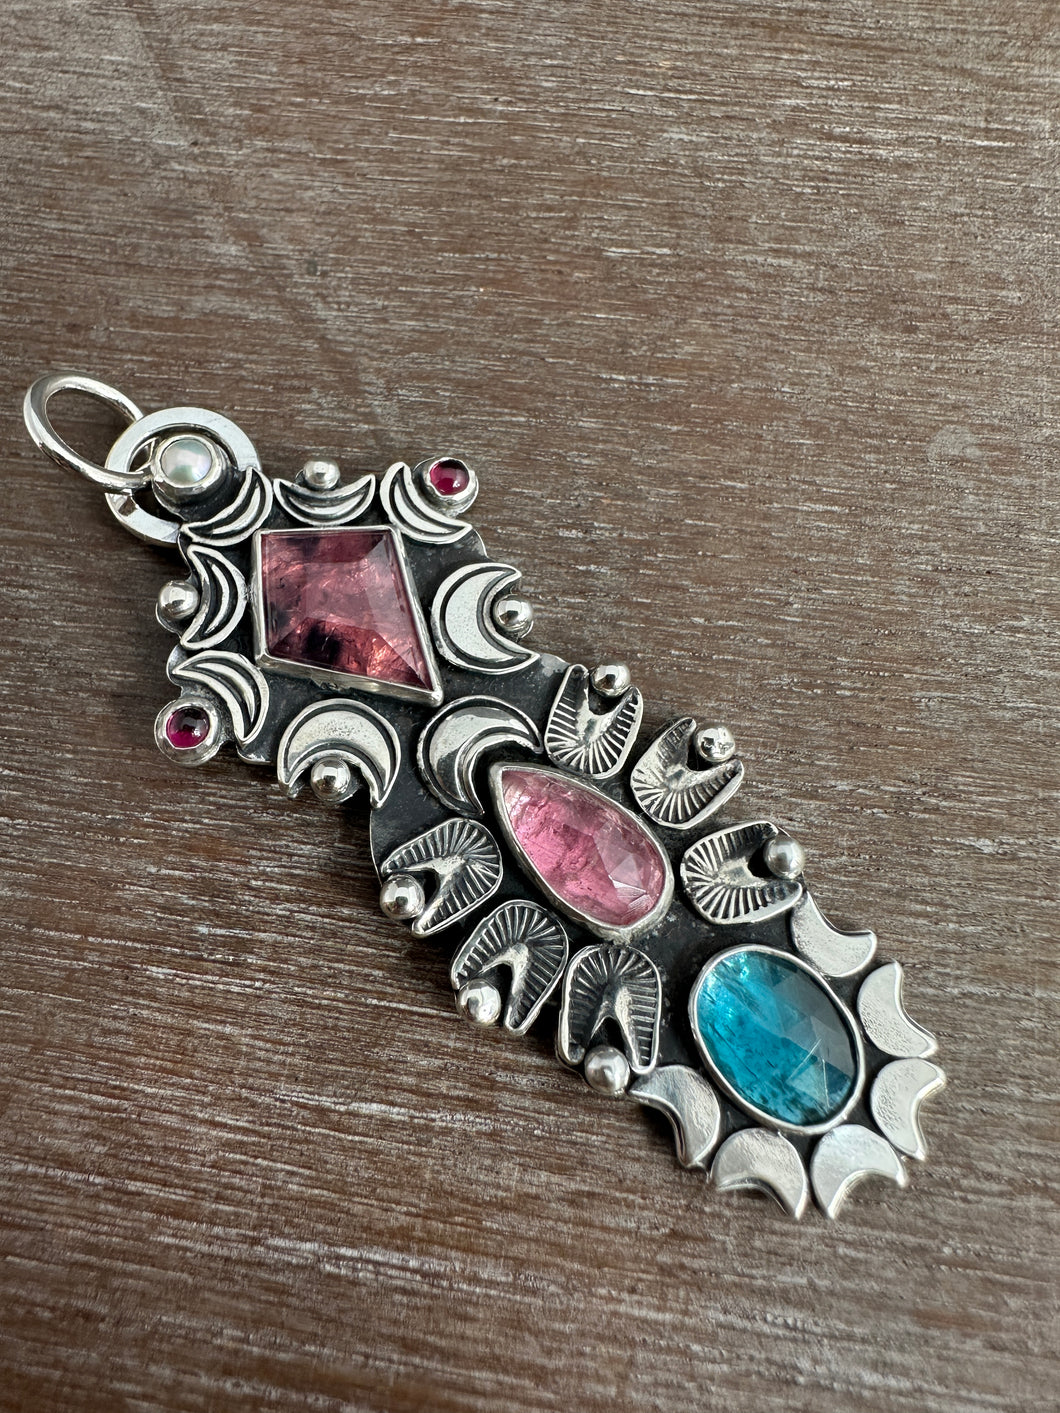 Multi stone pendant with a Winza Sapphire, Tourmaline, Kyanite, Garnets, and a Pearl